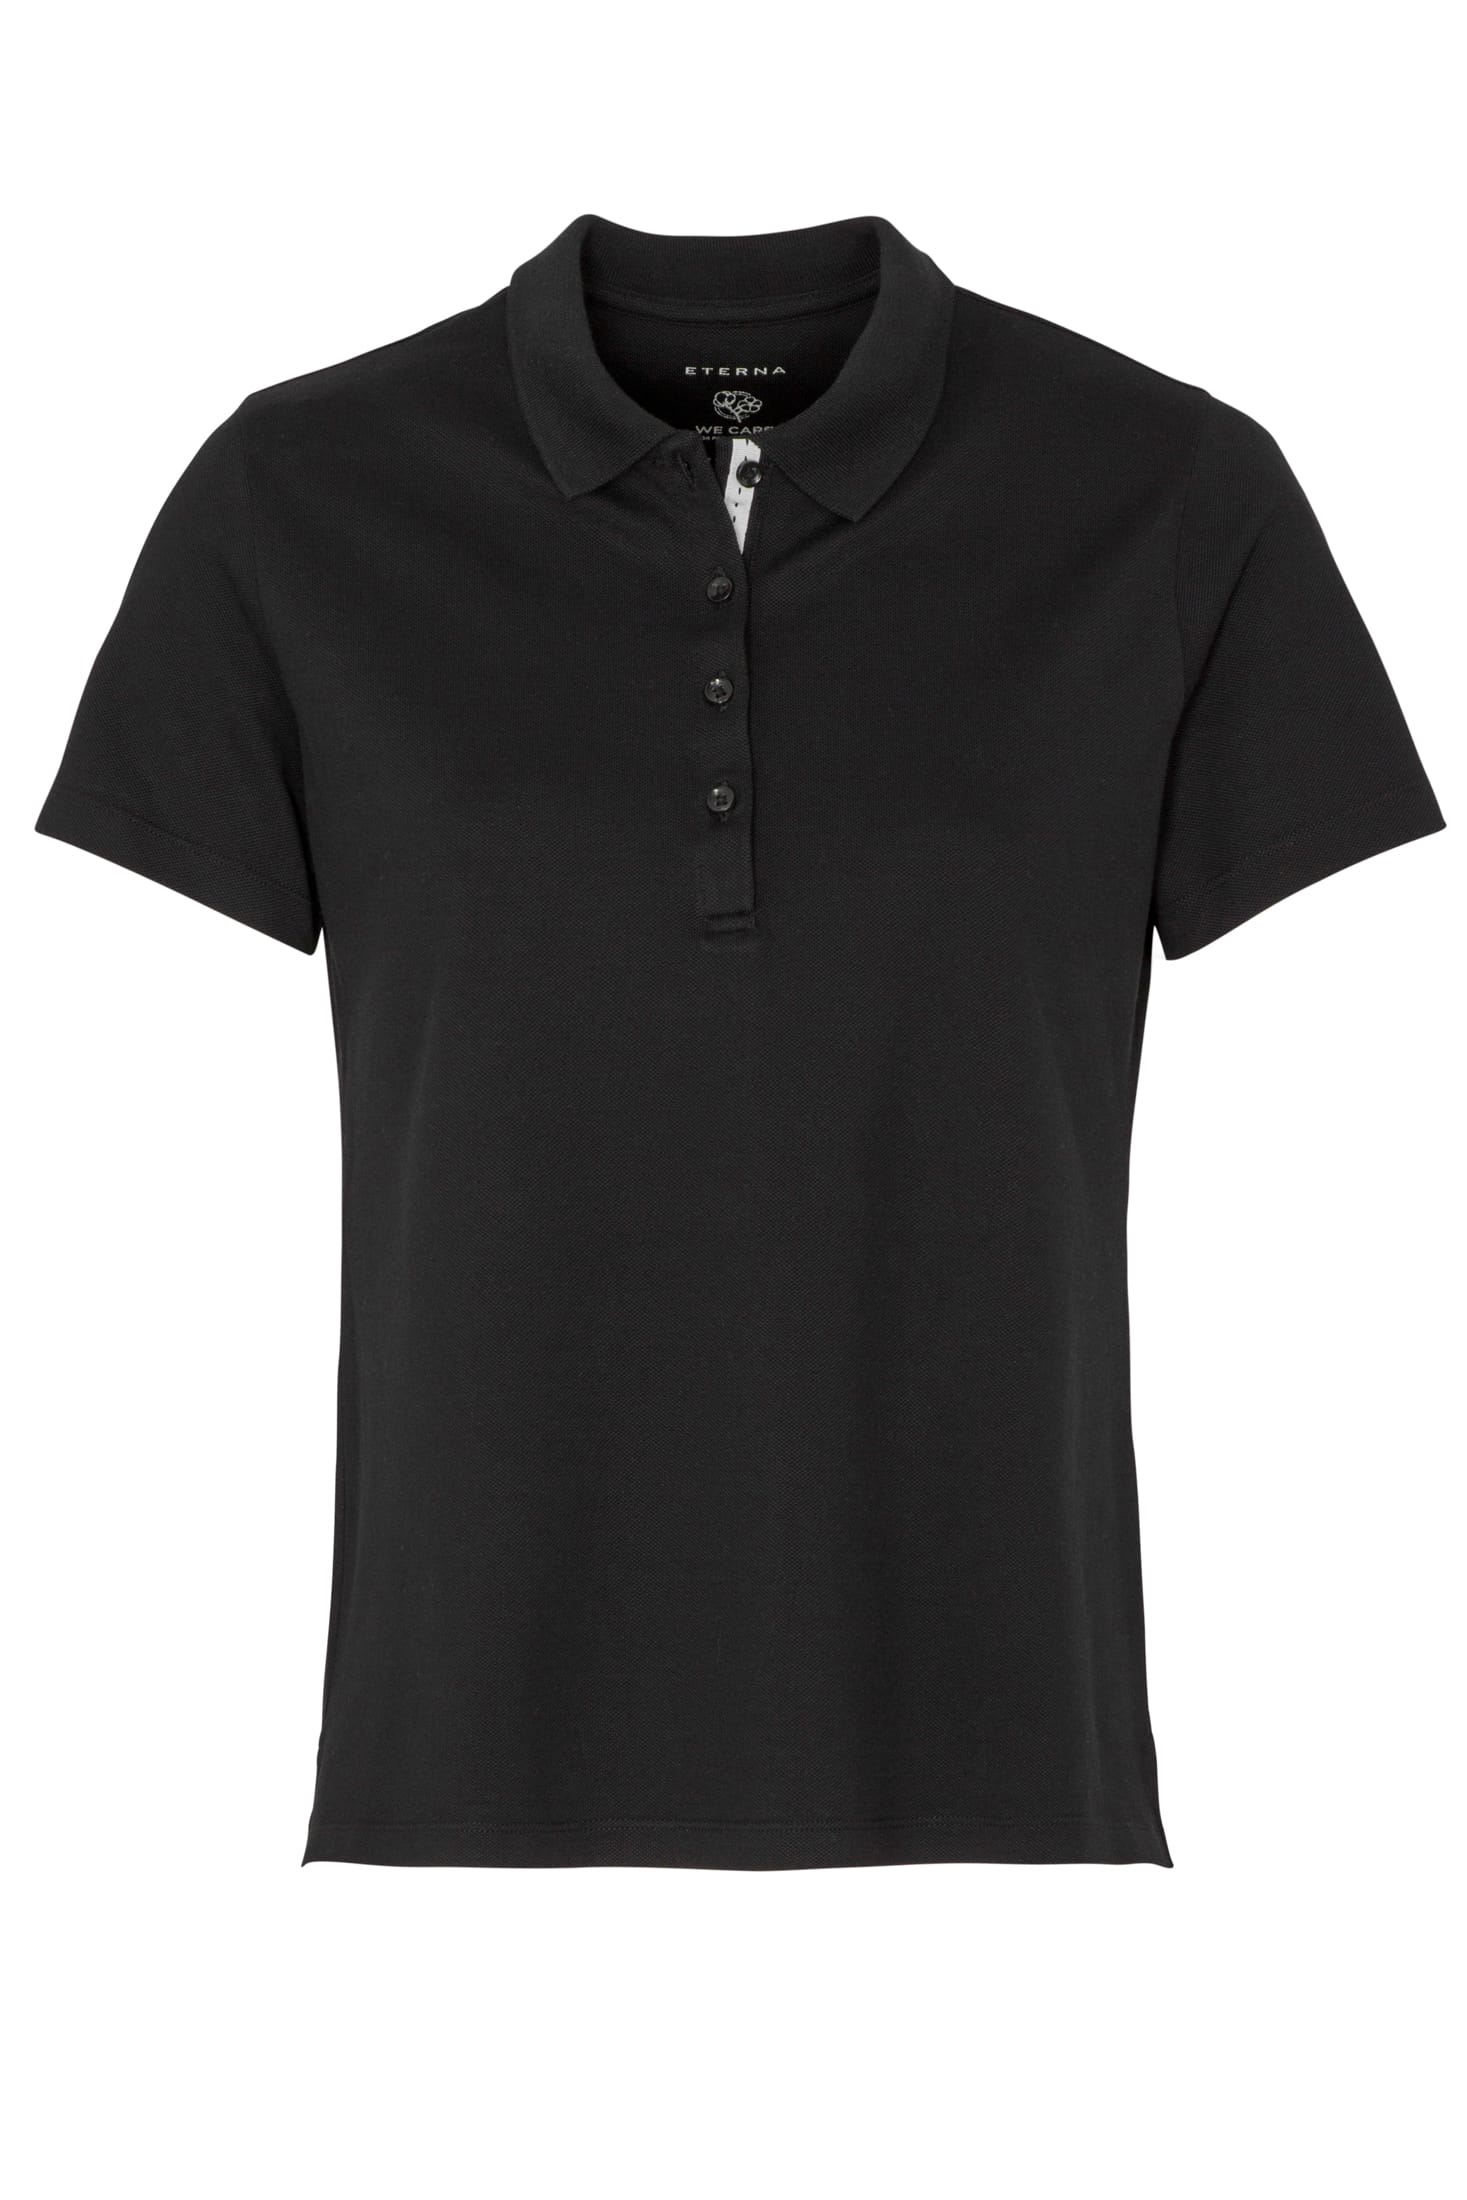 5535-39-H530 pique | schwarz Eterna Poloshirts Damen Poloshirt | ETERNA FIT Jeans-Manufaktur | CLASSIC Bekleidung |